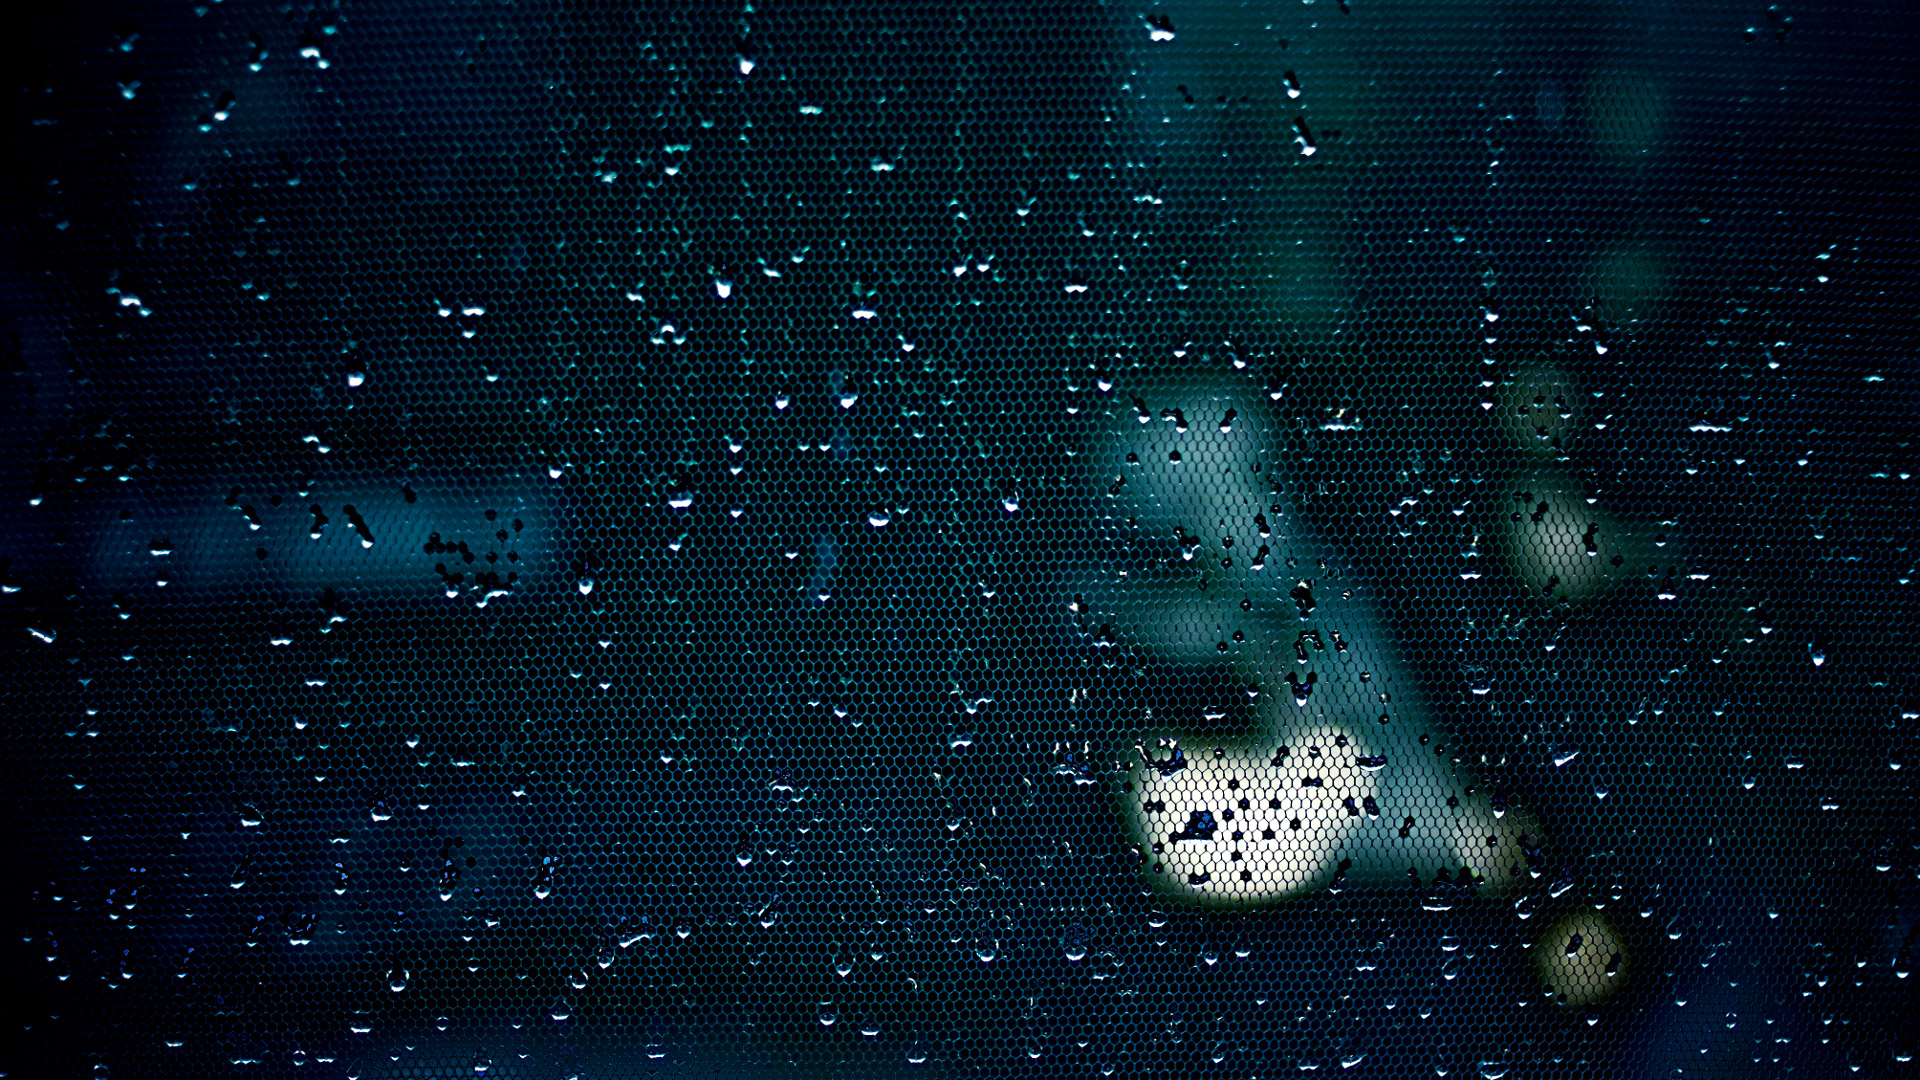 Screen Water Drops Wallpaper Background